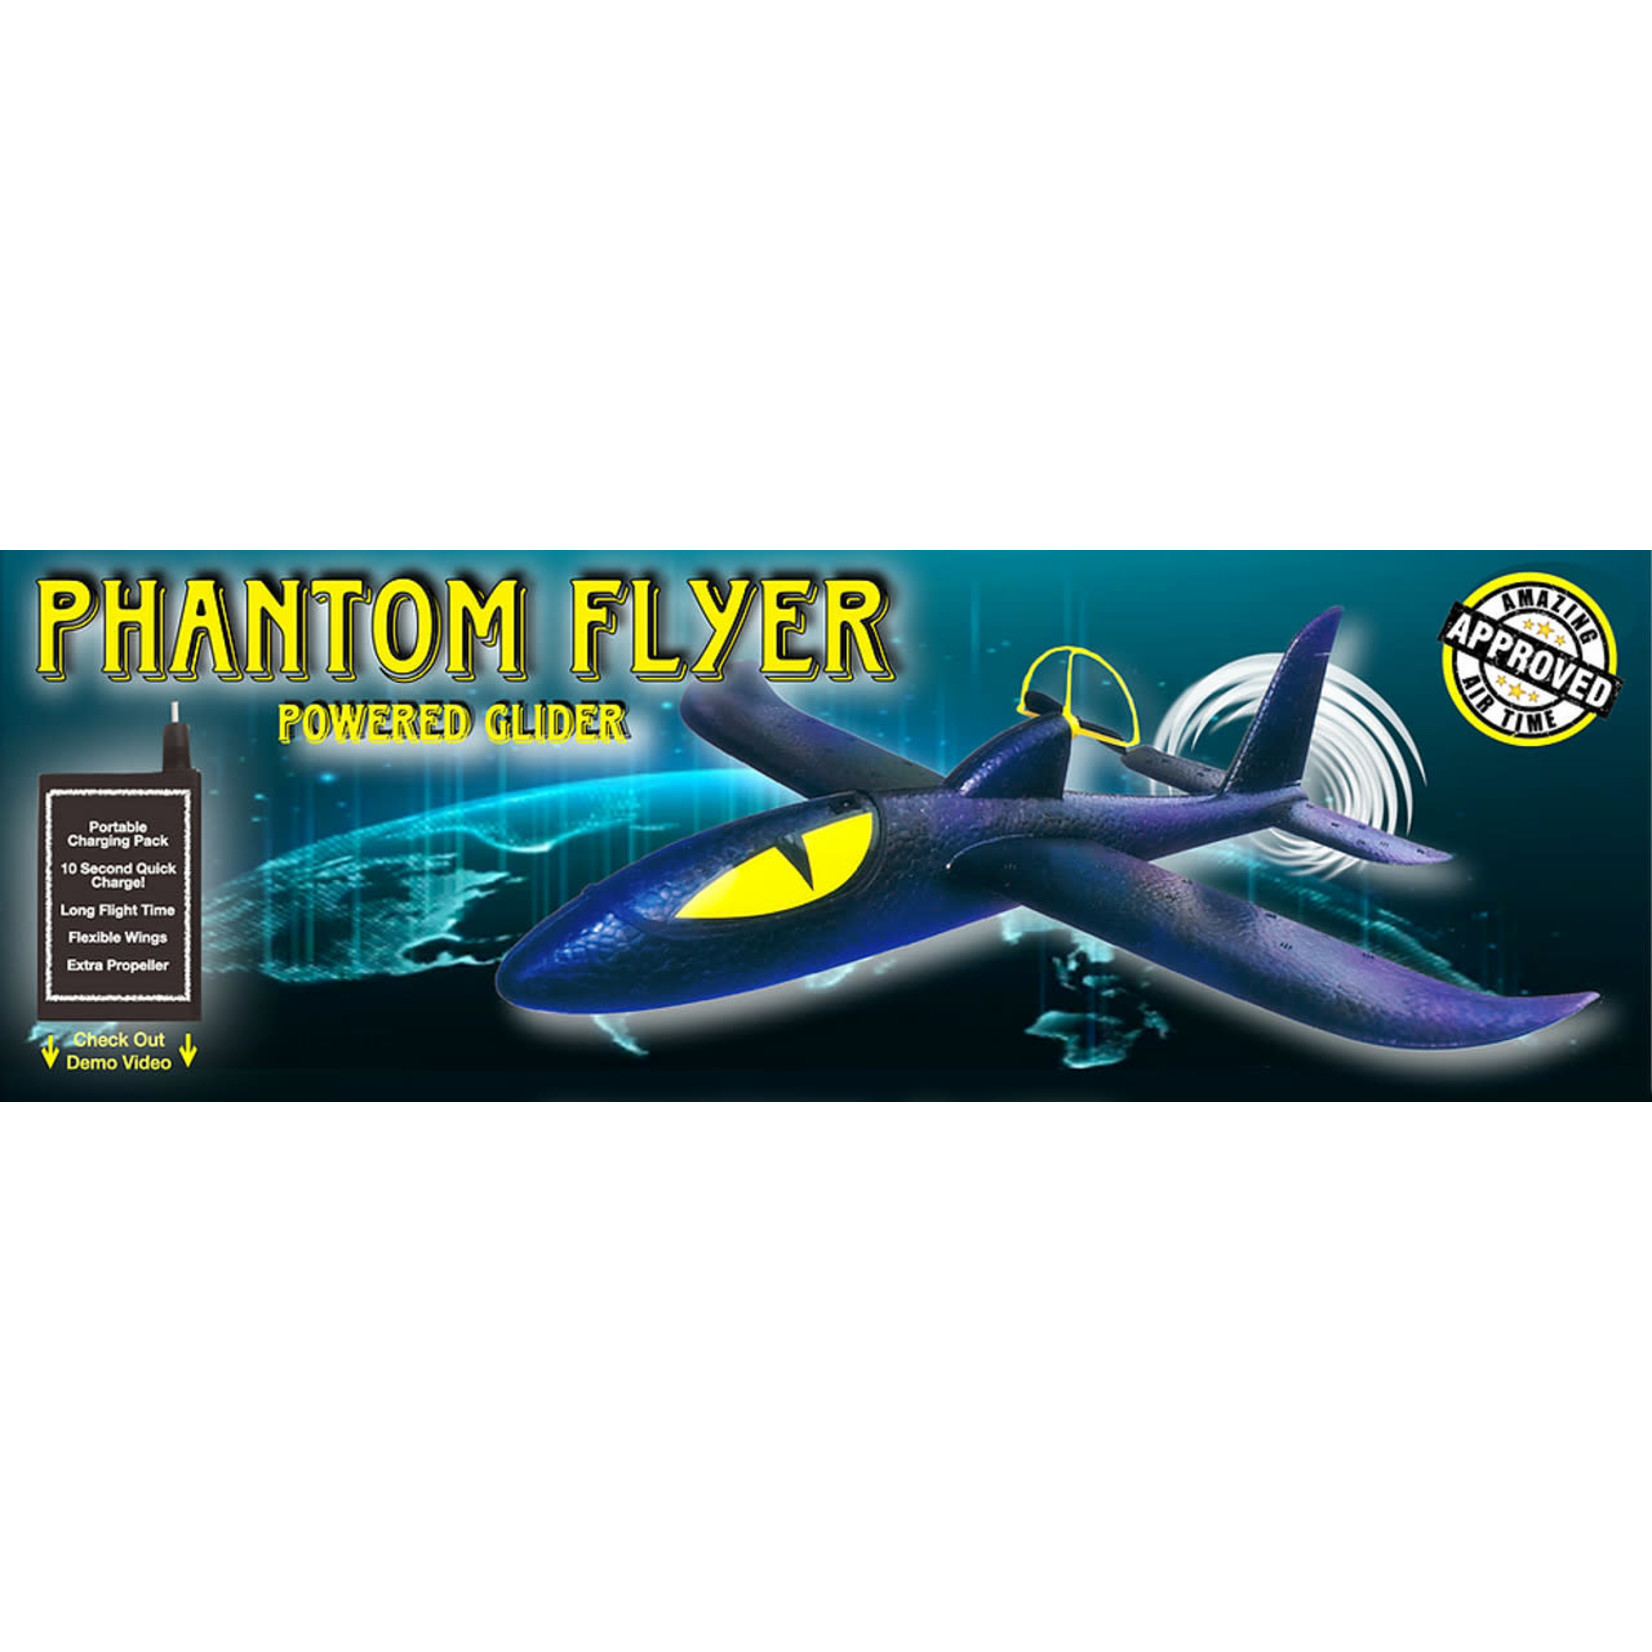 Spin Copter Phantom Flyer